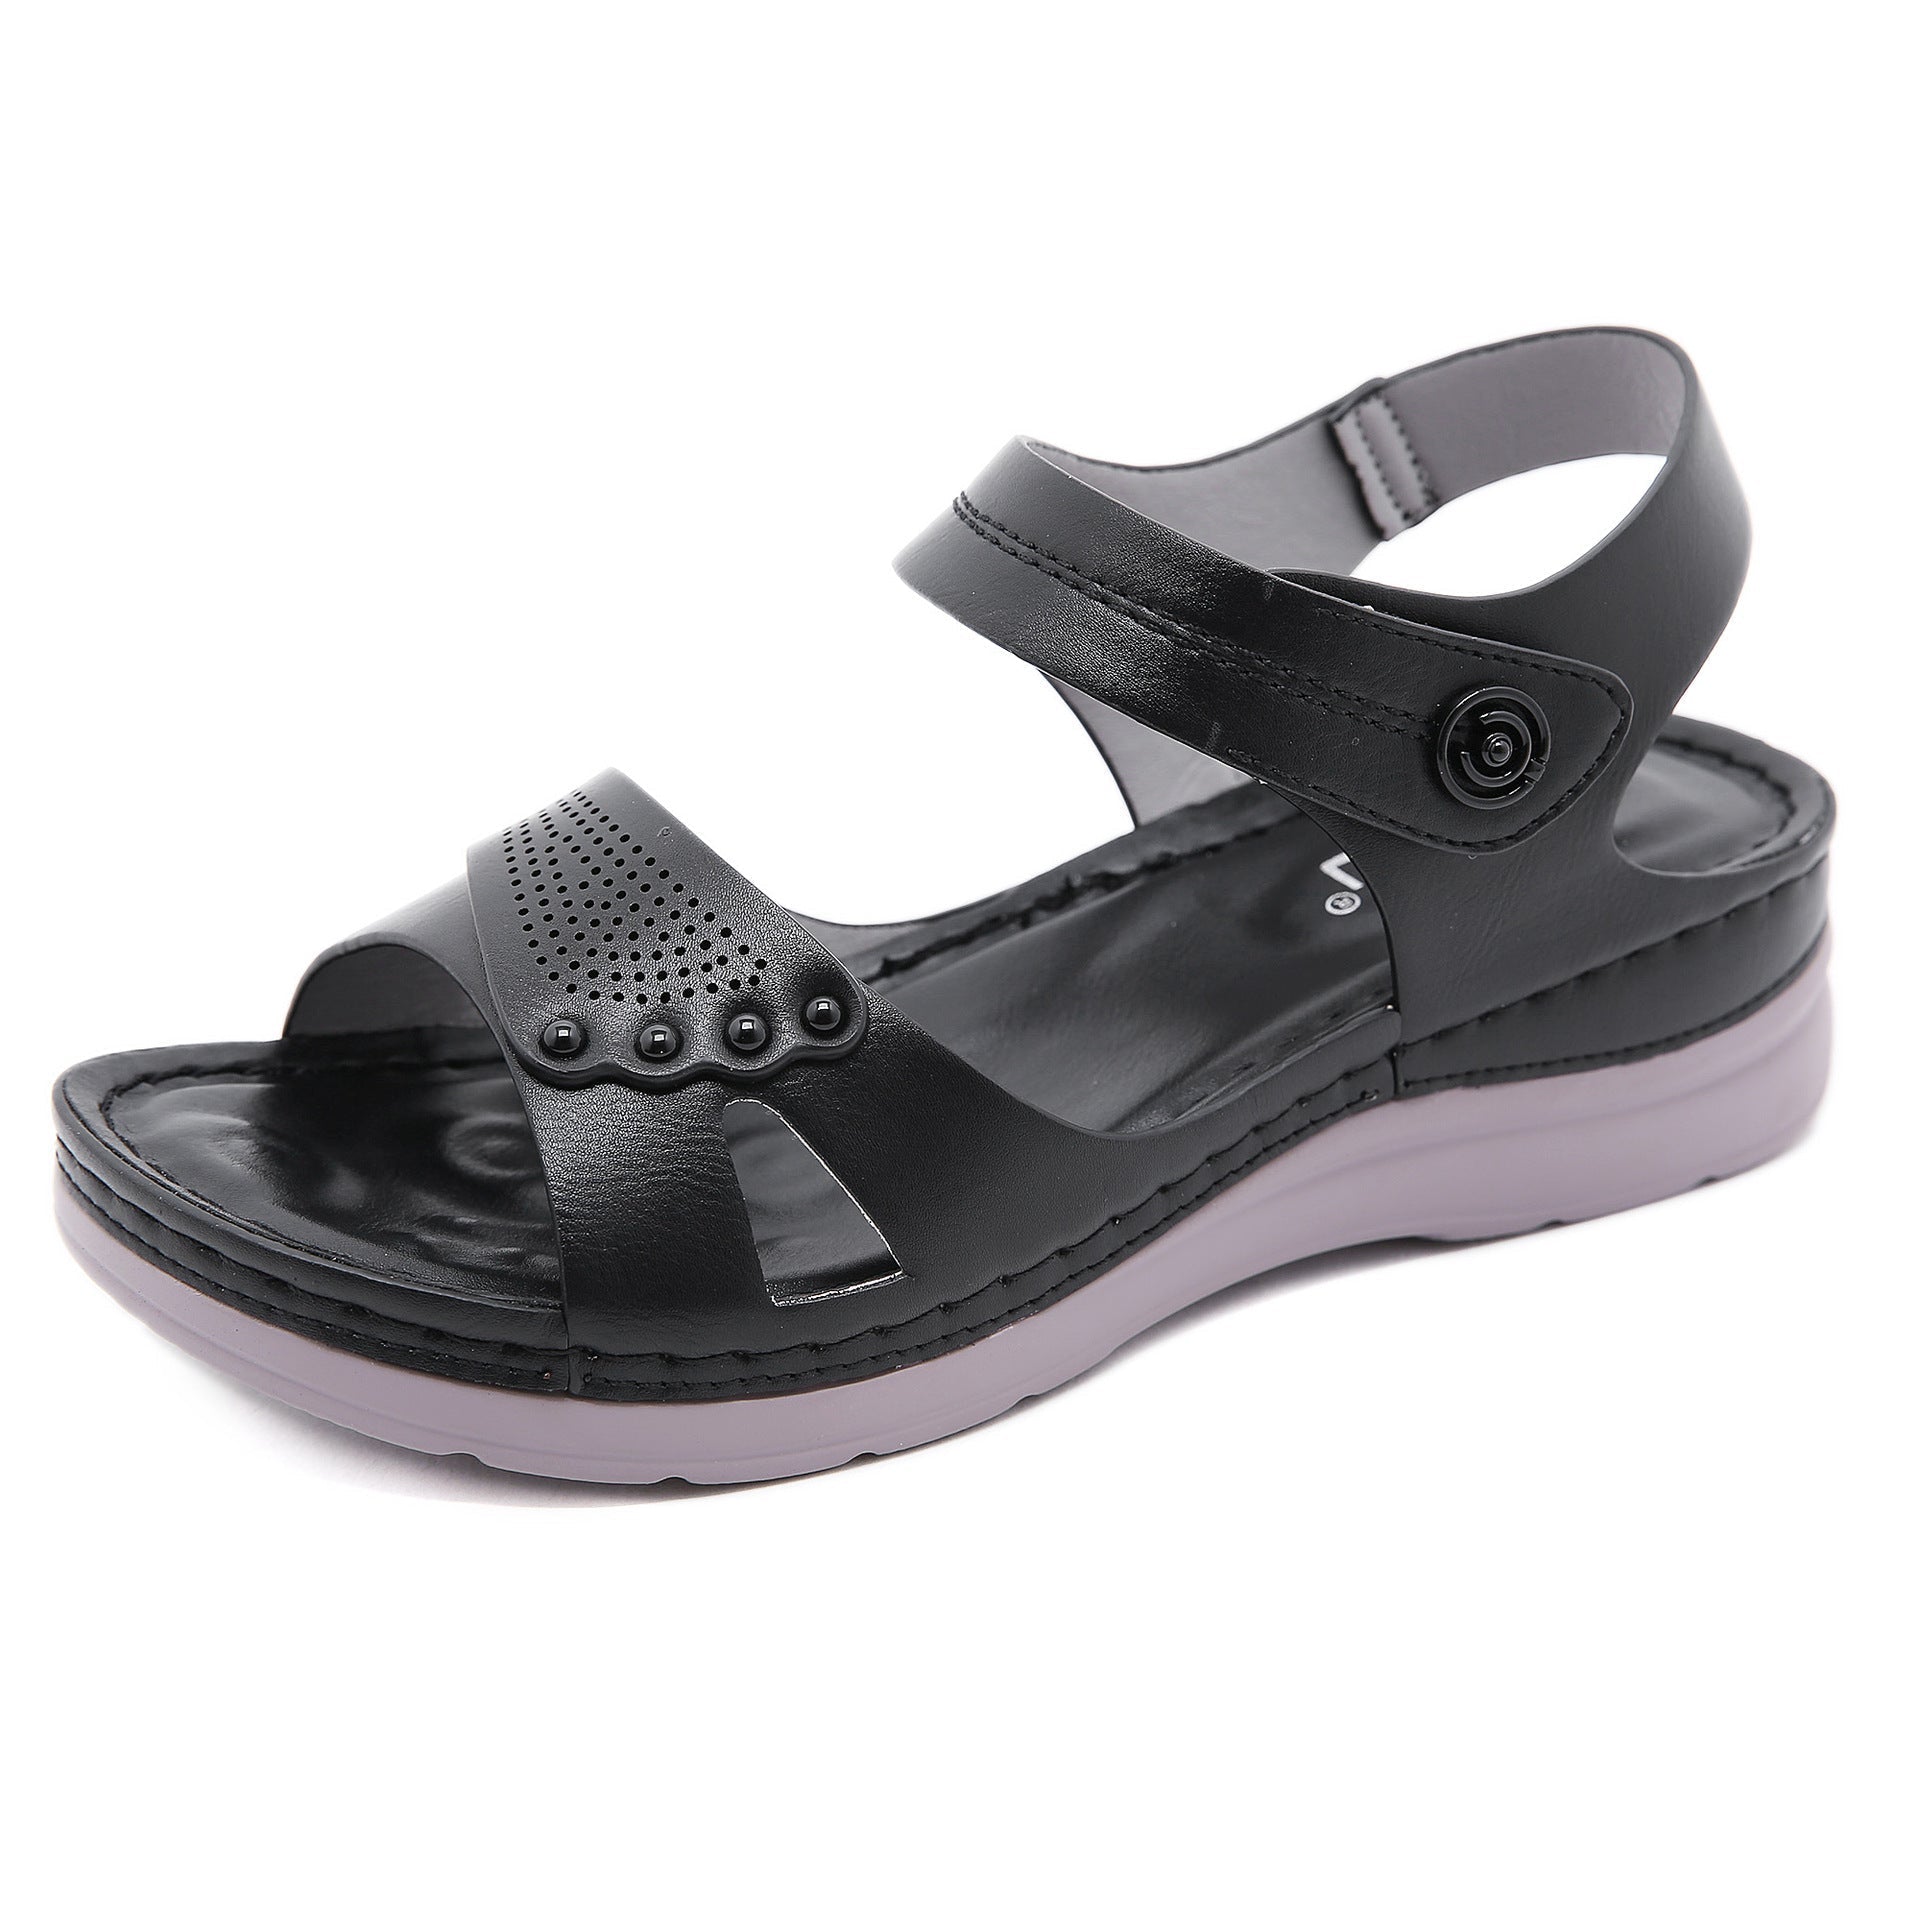 Casual comfortable lightweight  non-slip sandals